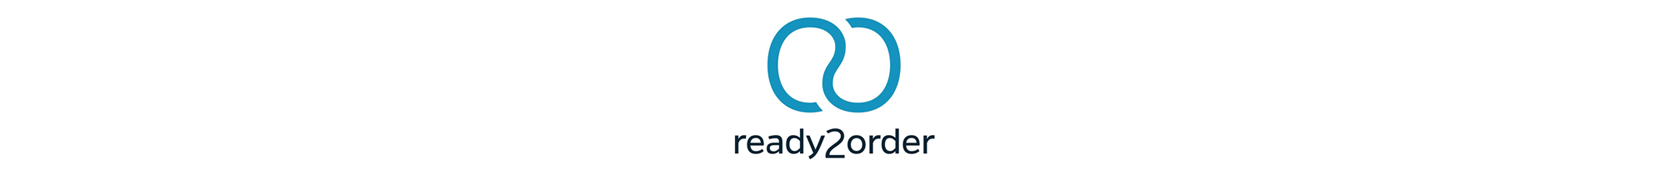 ready 2 order Kundenlogos Banner 2021_.png